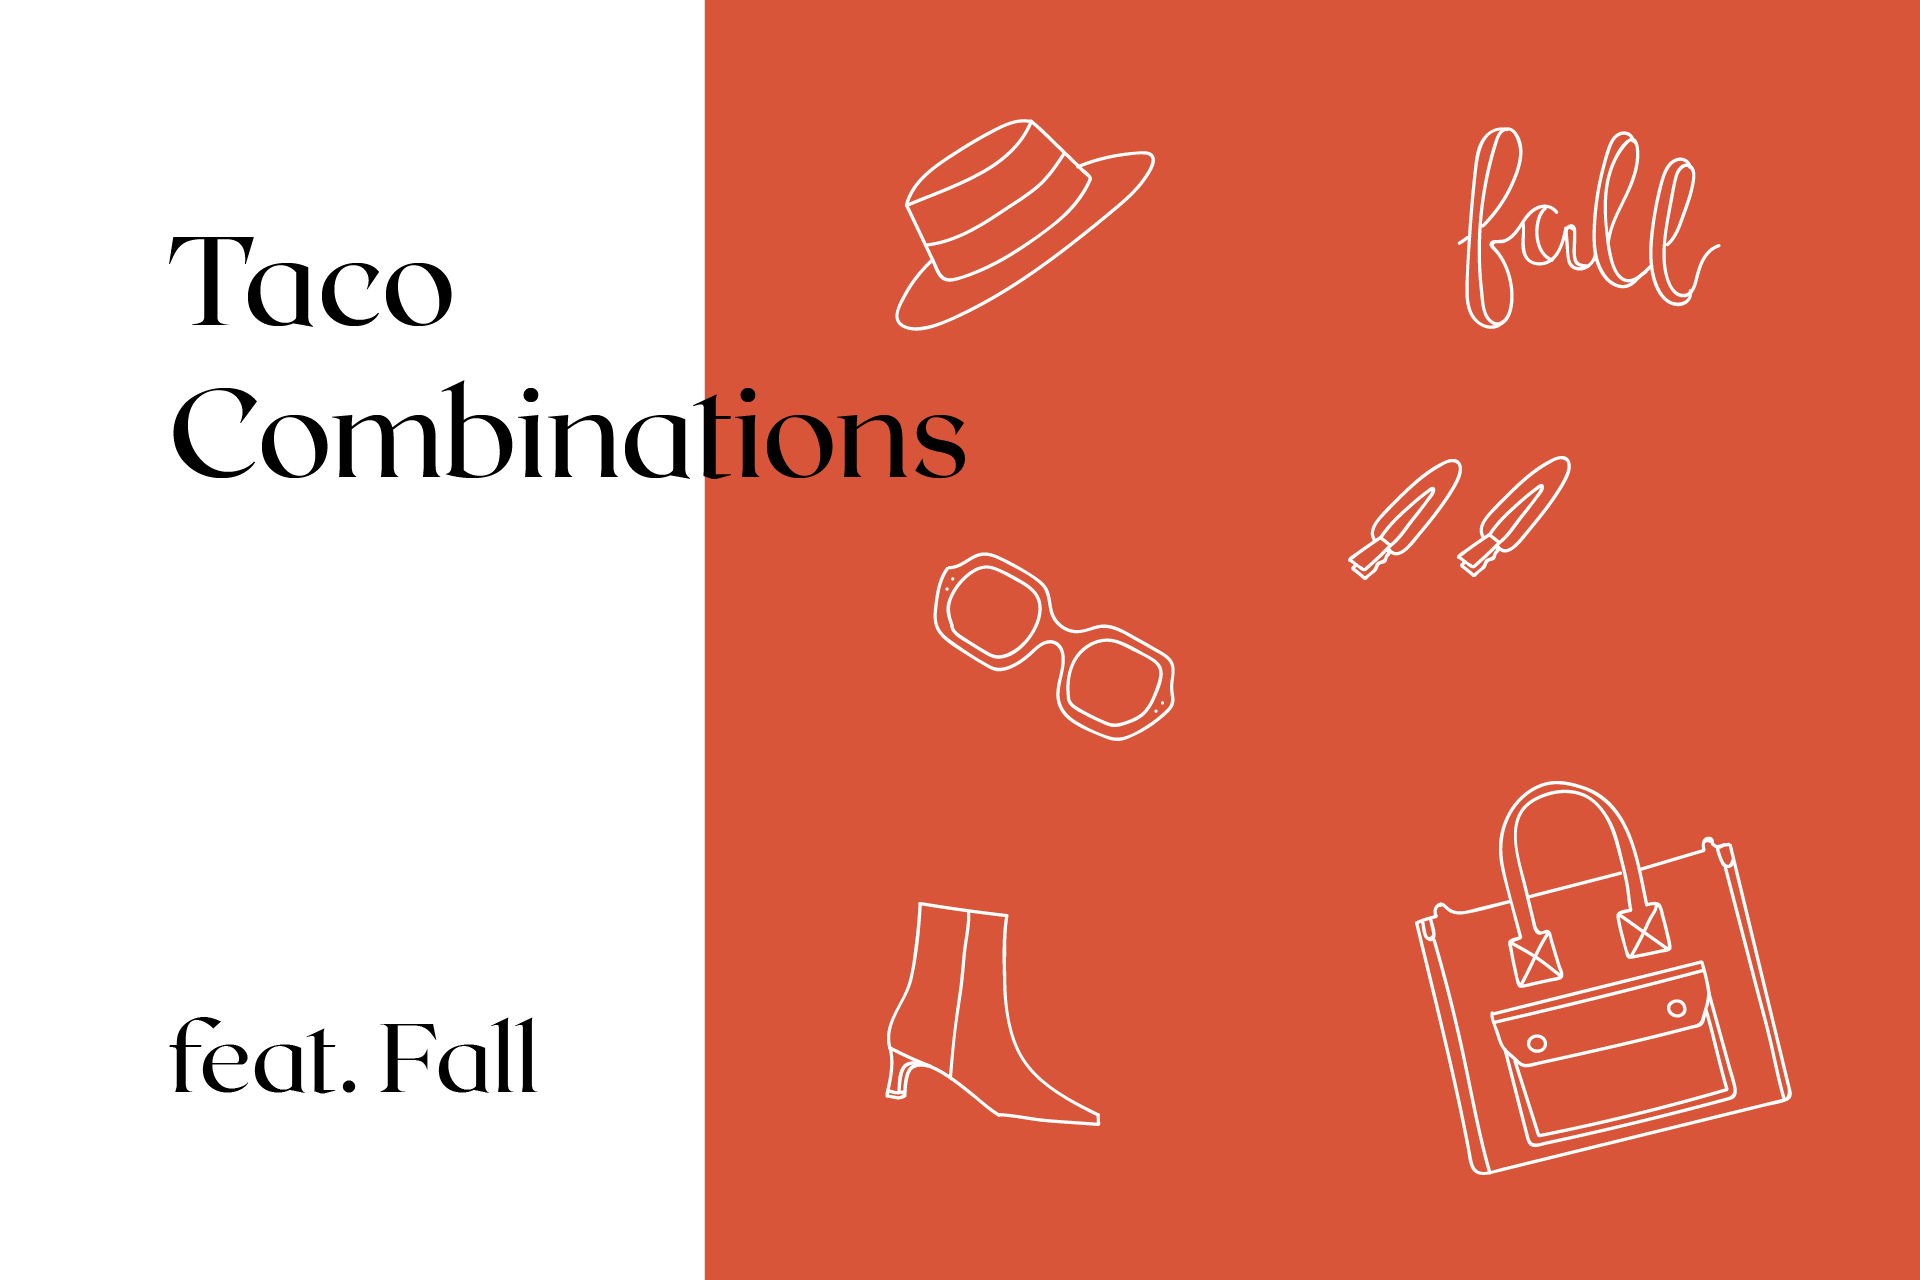 Taco Combinations feat. Fall